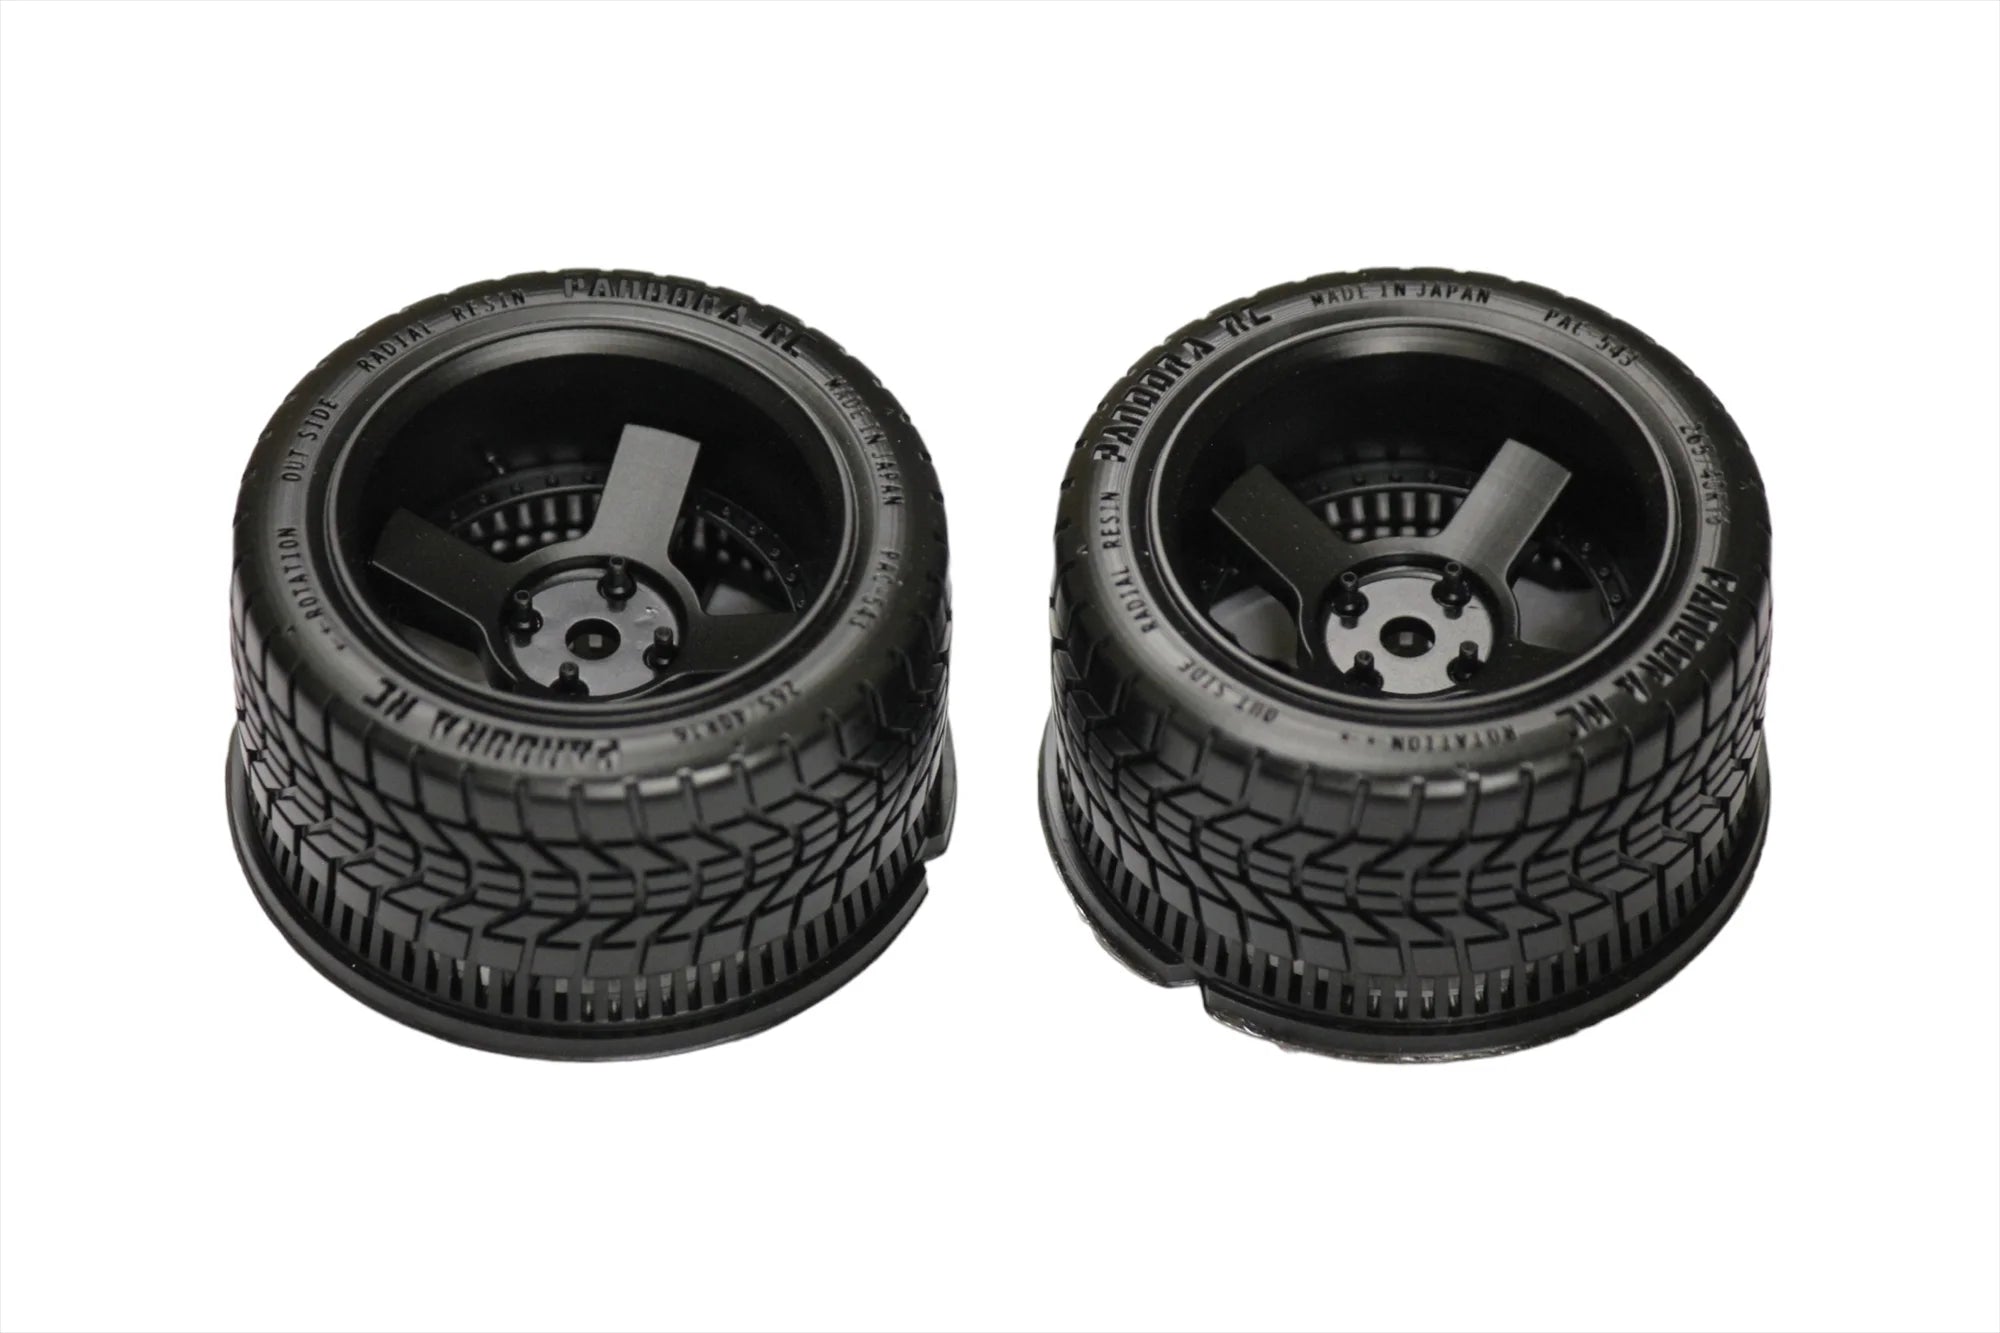 Pandora RC PAC-543 Display Small diameter wheels/tires ZERO-4/ 2pcs - BanzaiHobby